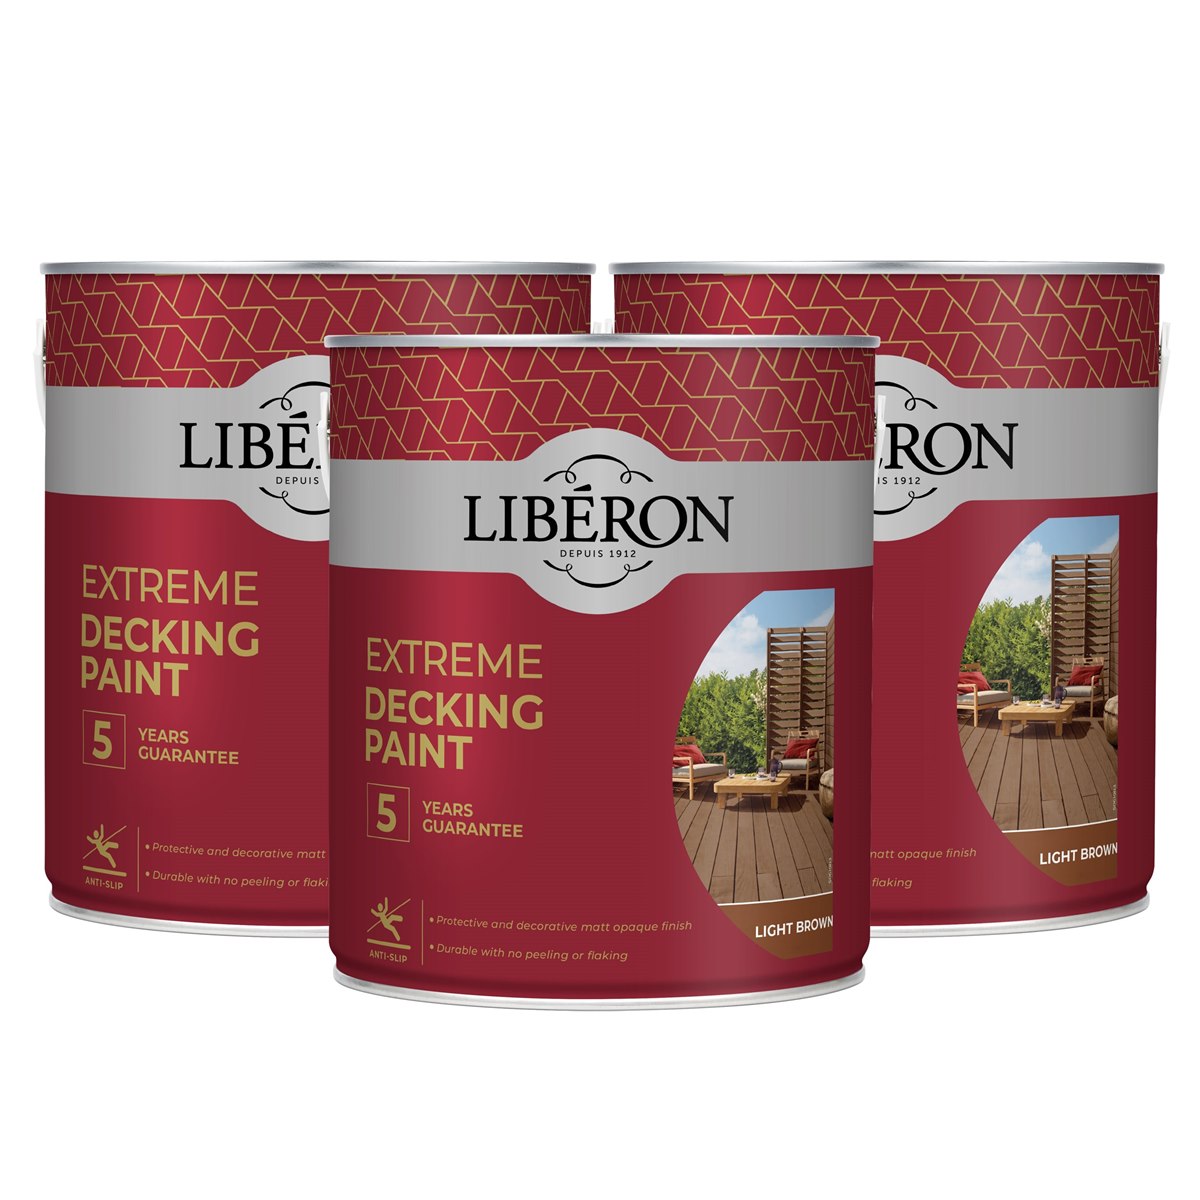 Case of 3 x Liberon Extreme Decking Paint Light Brown 2.5 Litre